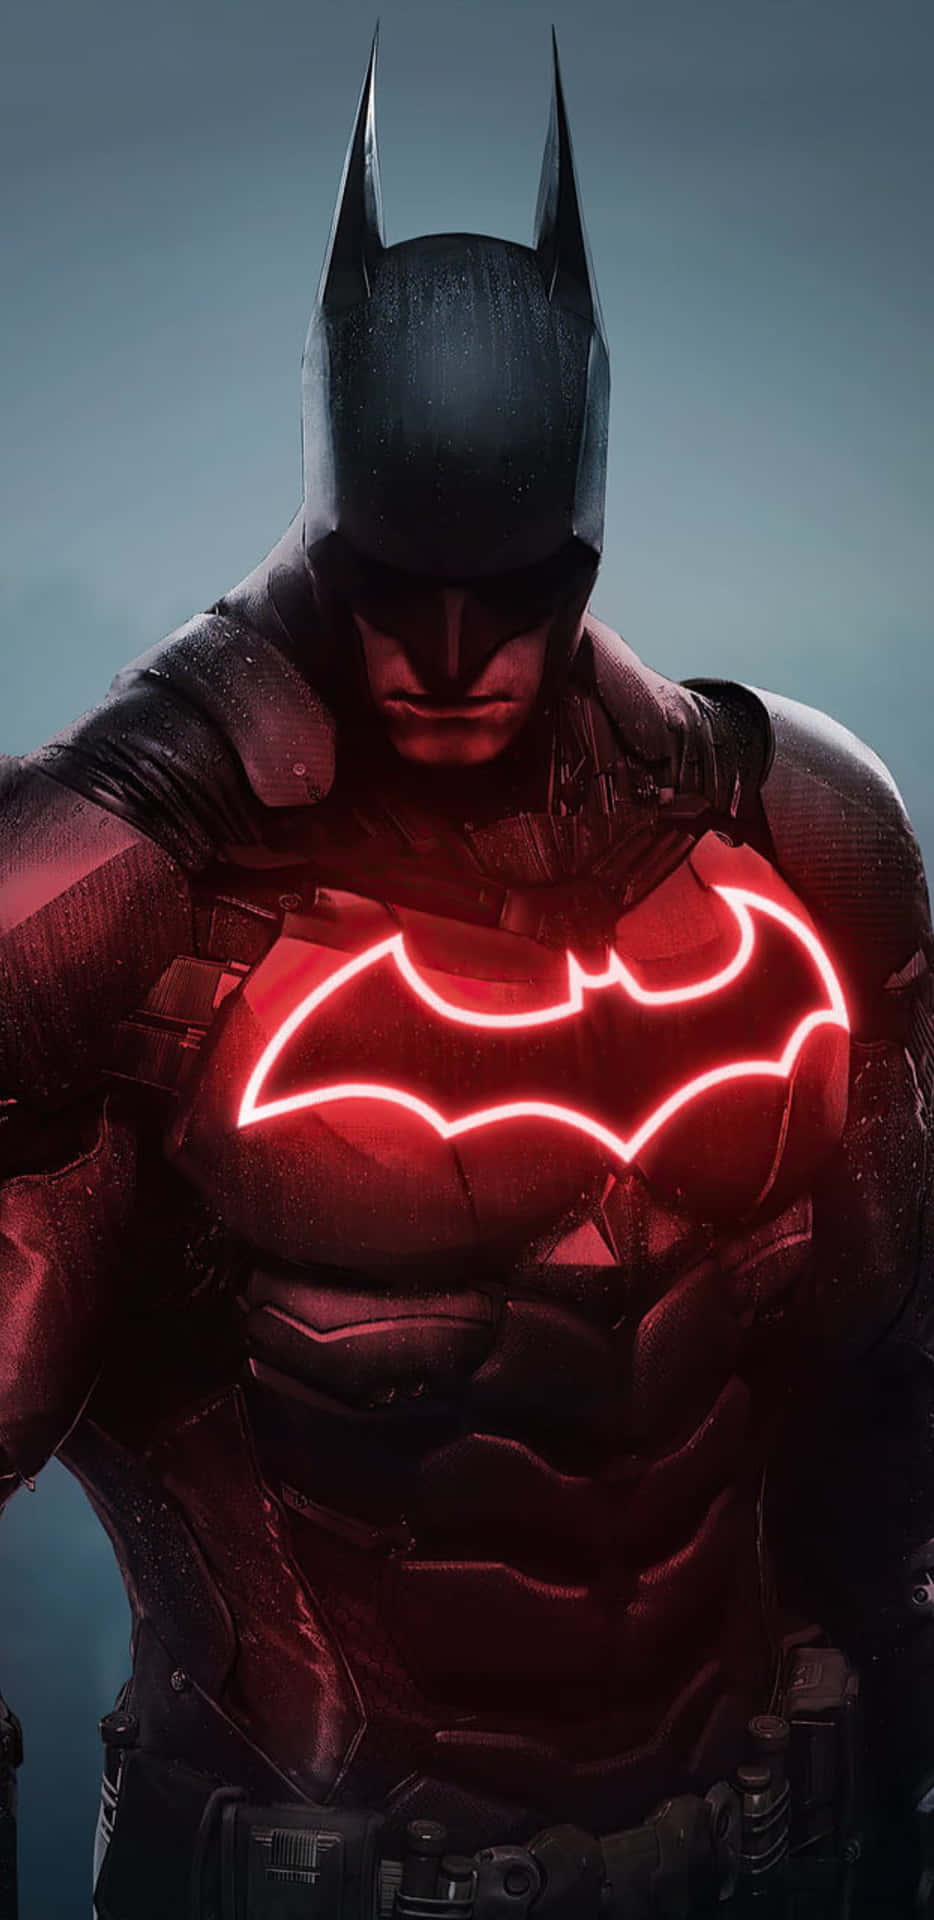 Gotham's hero fights against injustice